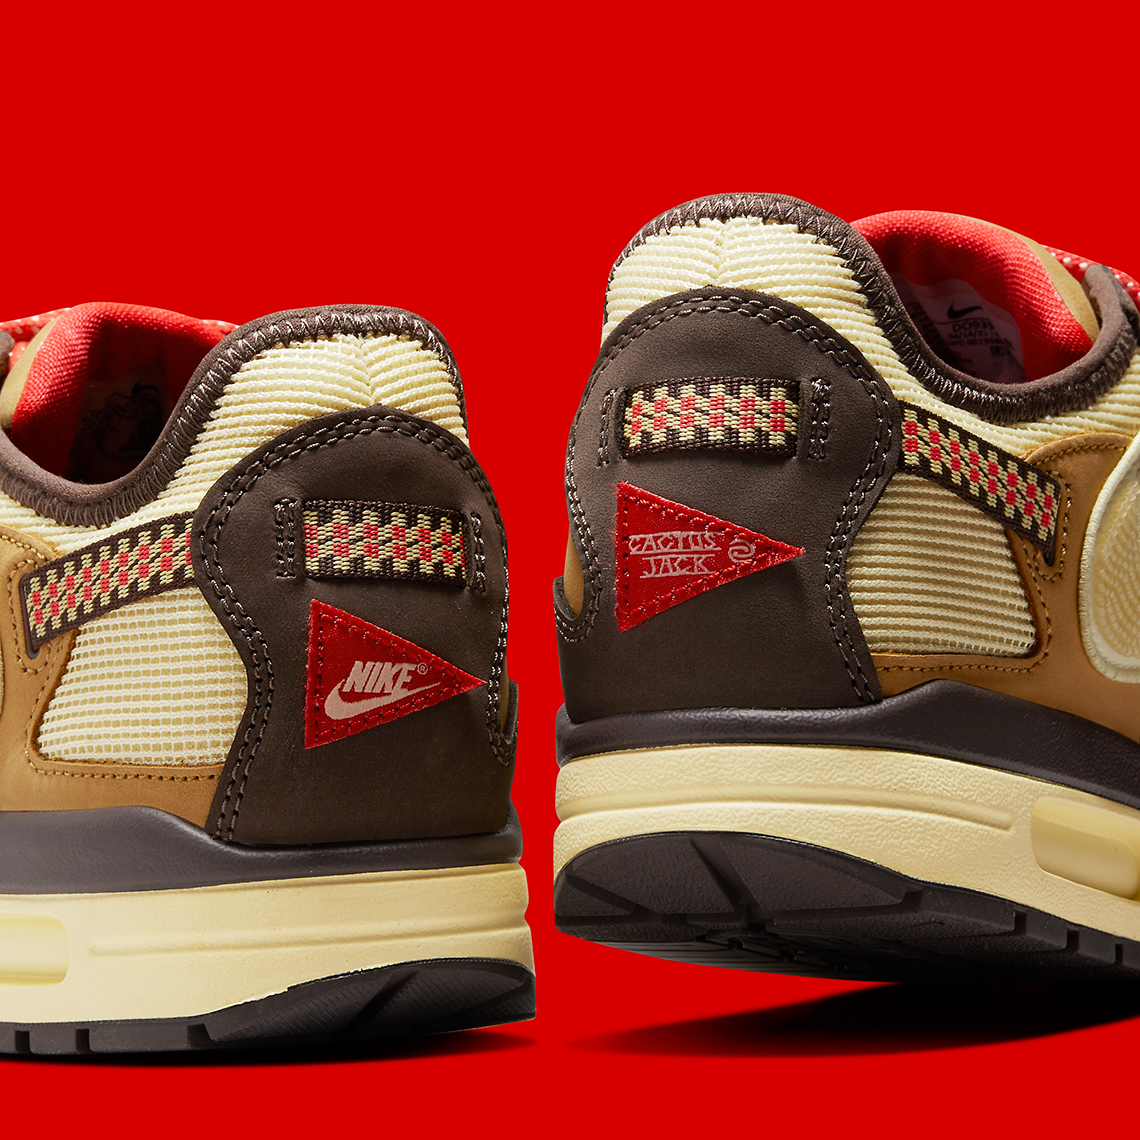 Travis Scott Nike Air Max 1 Release Date Postponed | SneakerNews.com